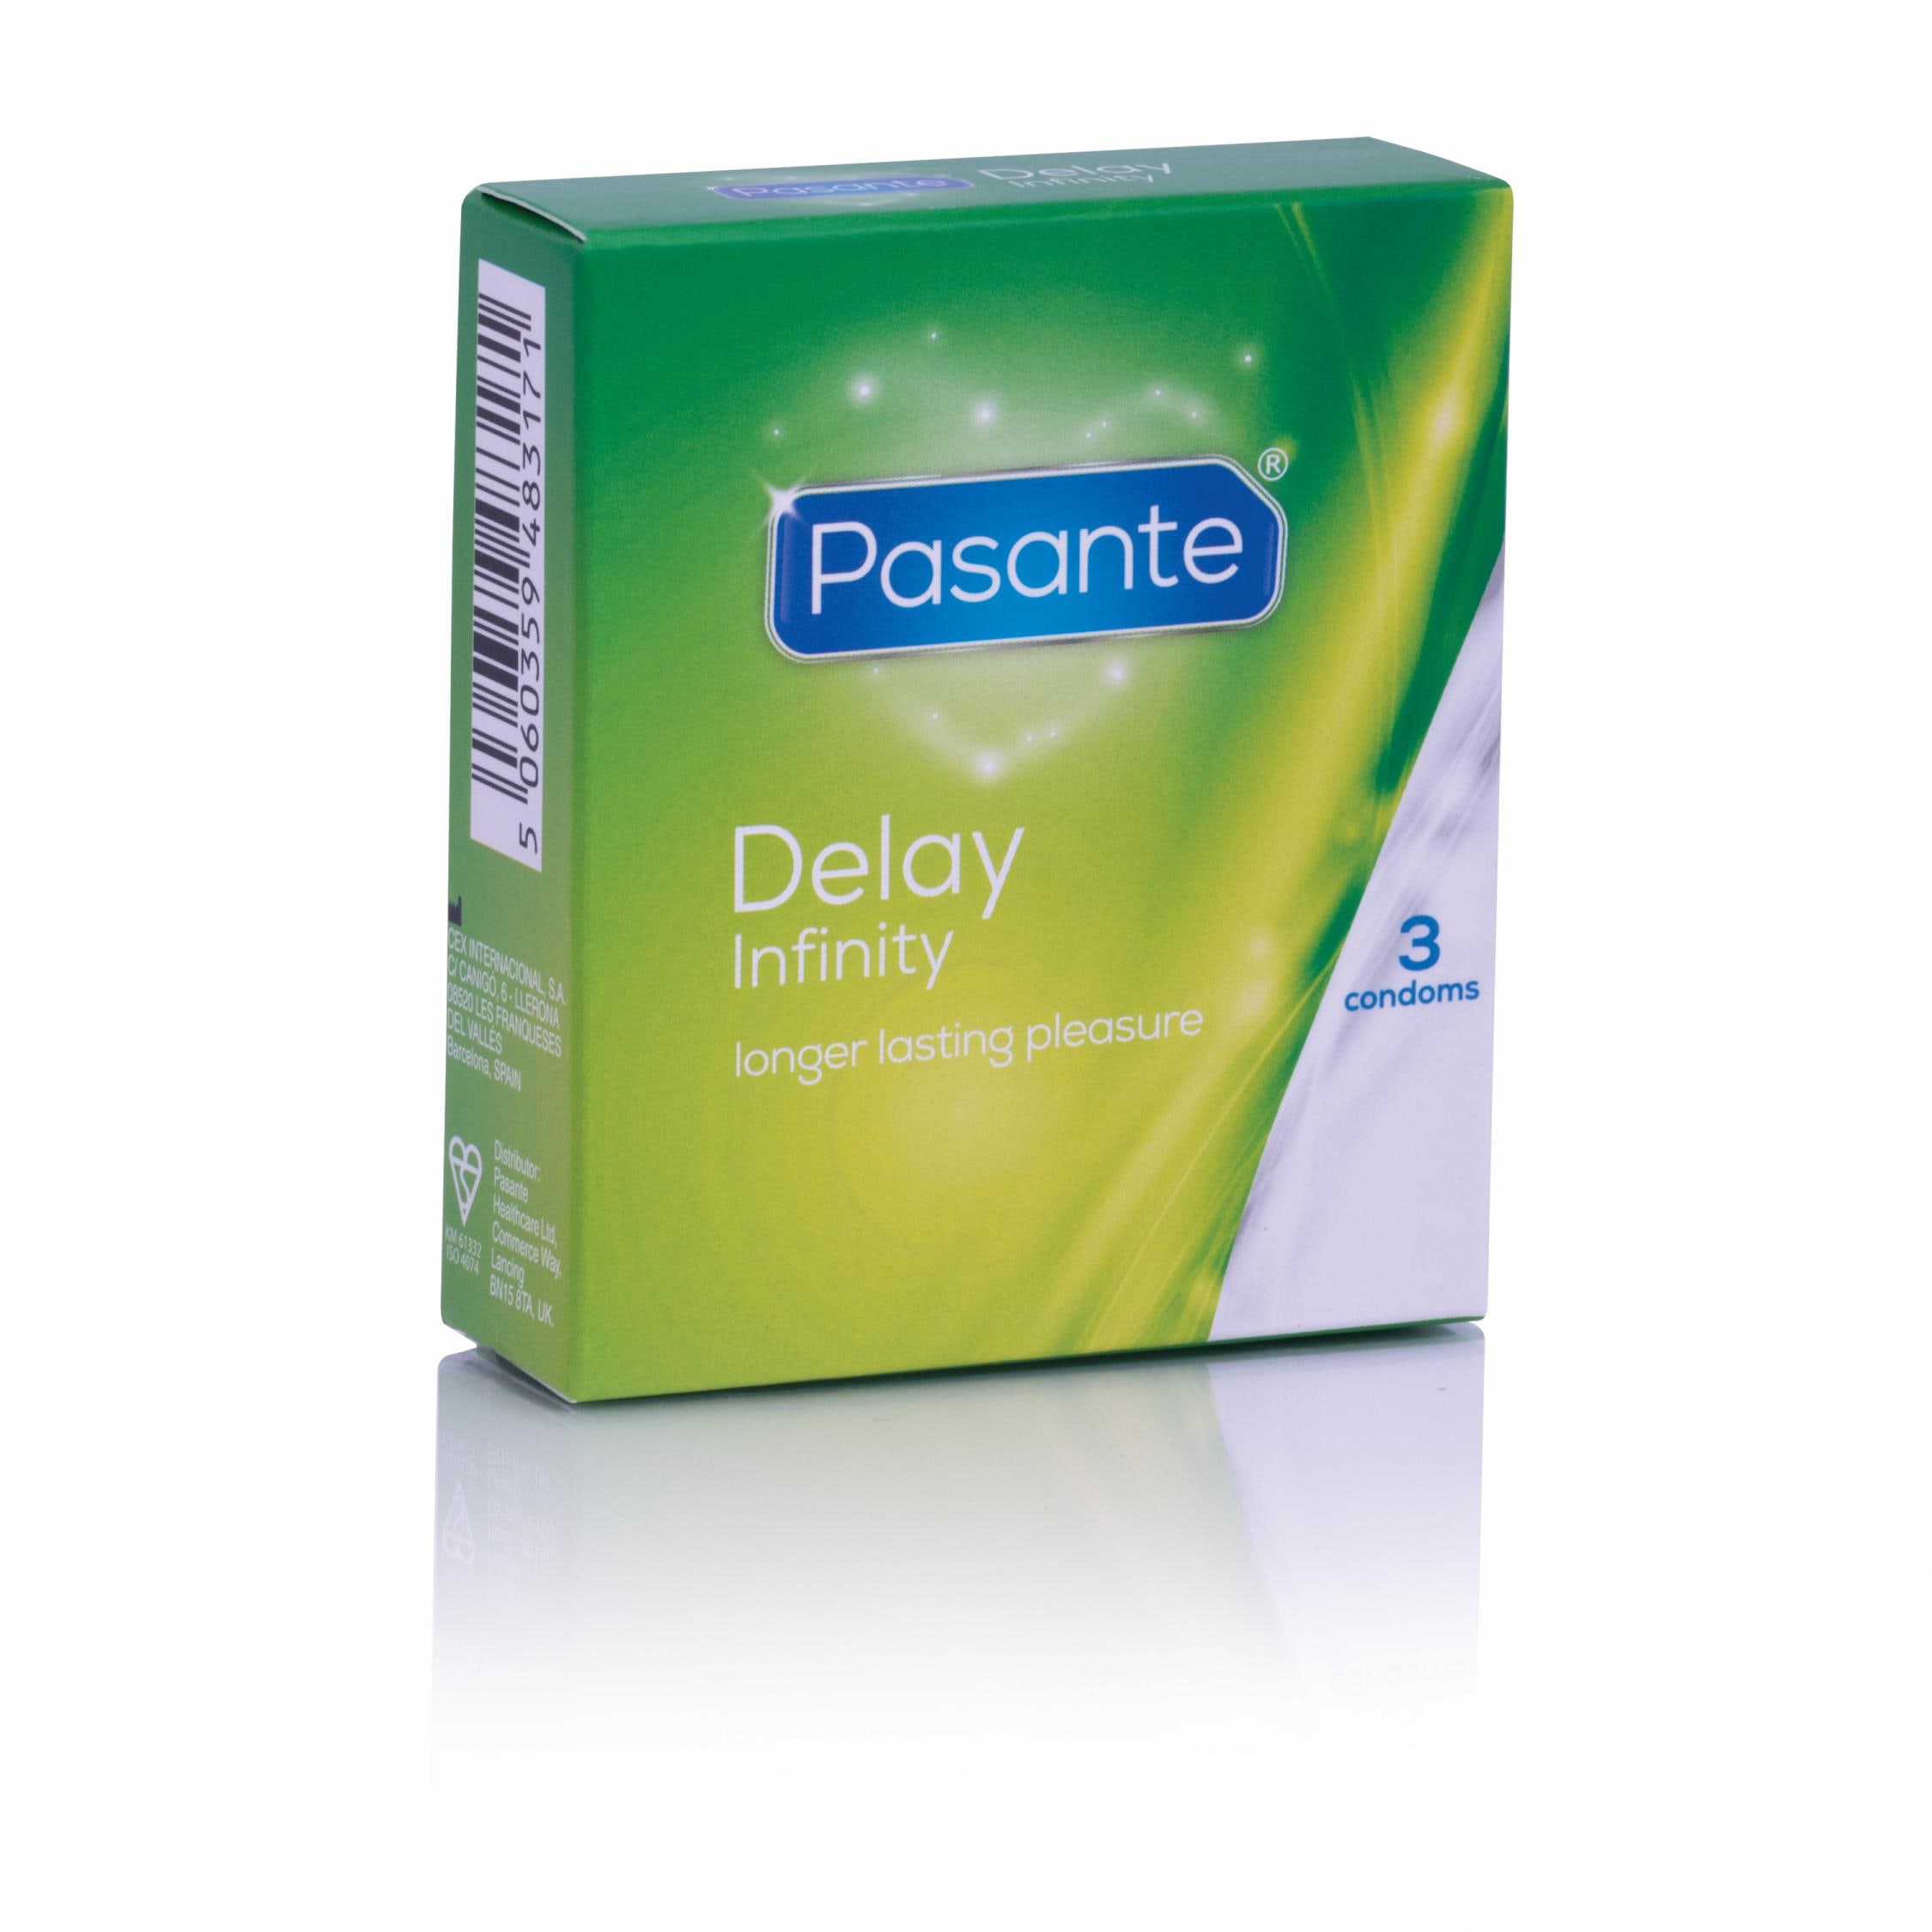 Pasante Infinity Delay Condoms (3 Pack)